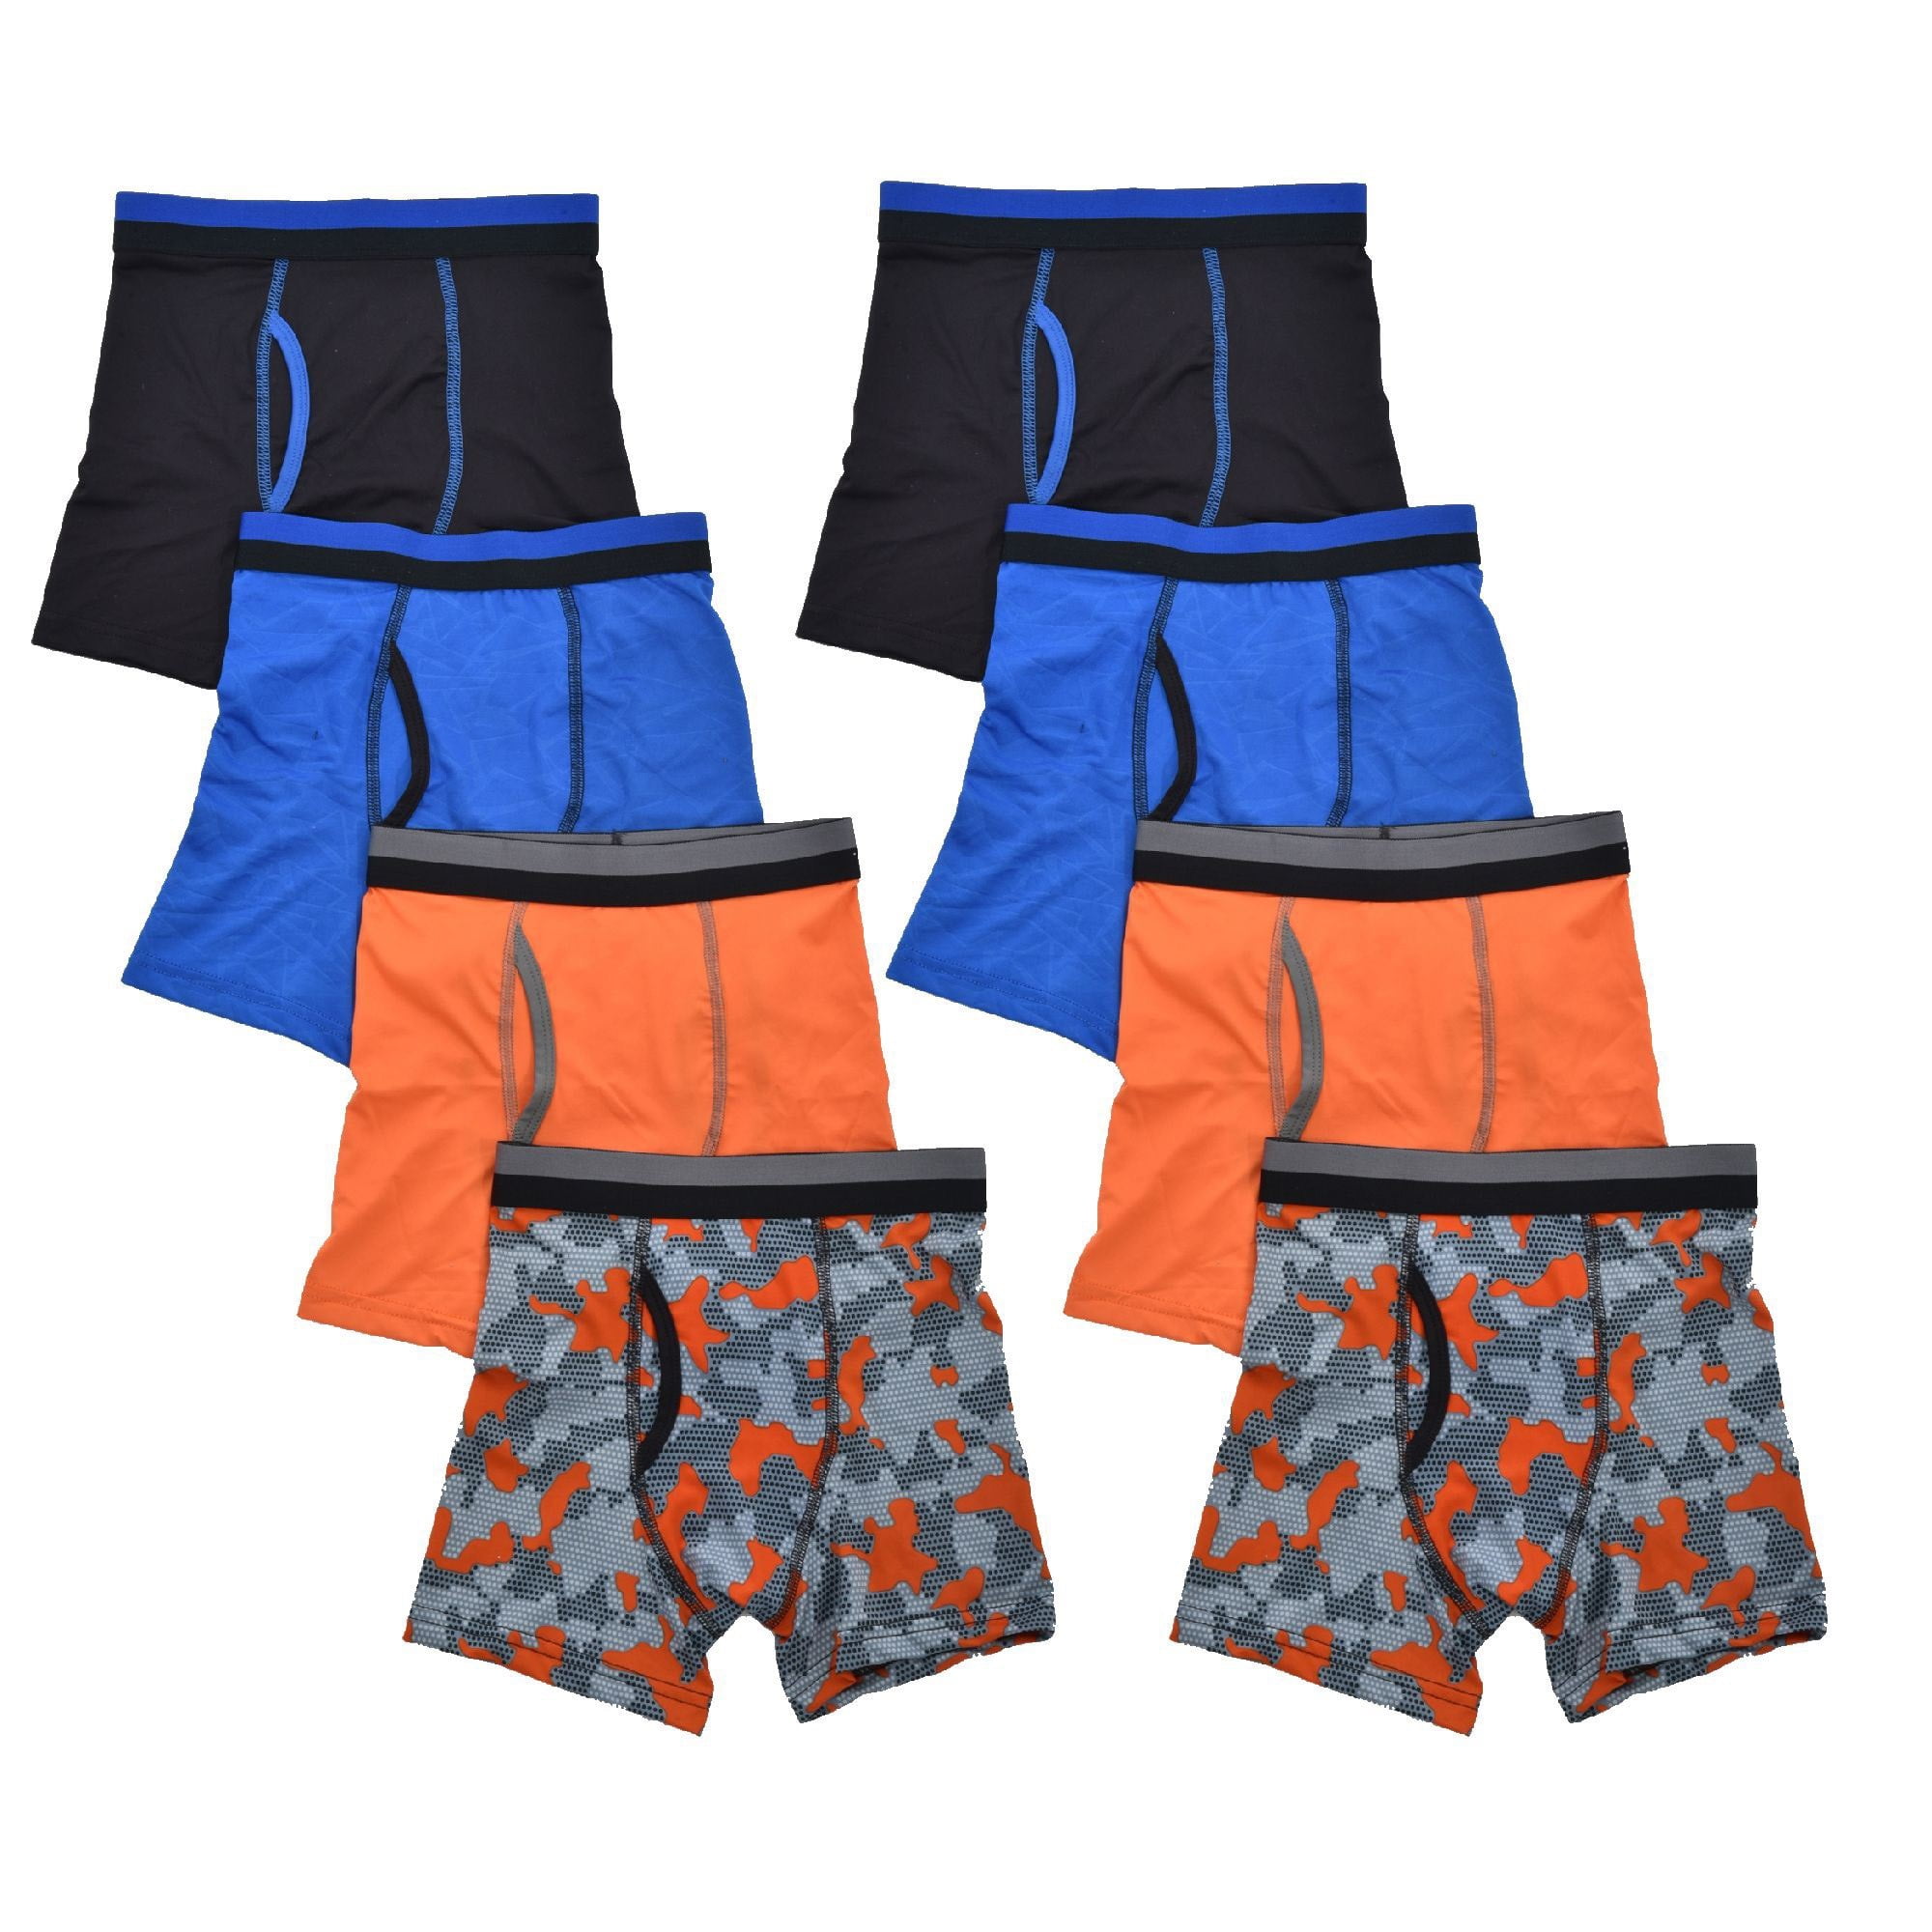 Hoolerry 3 Pcs Youth Boys Compression Shorts Athletic Underwear Sports  Performance Boxer Briefs Spandex Underwear for Running